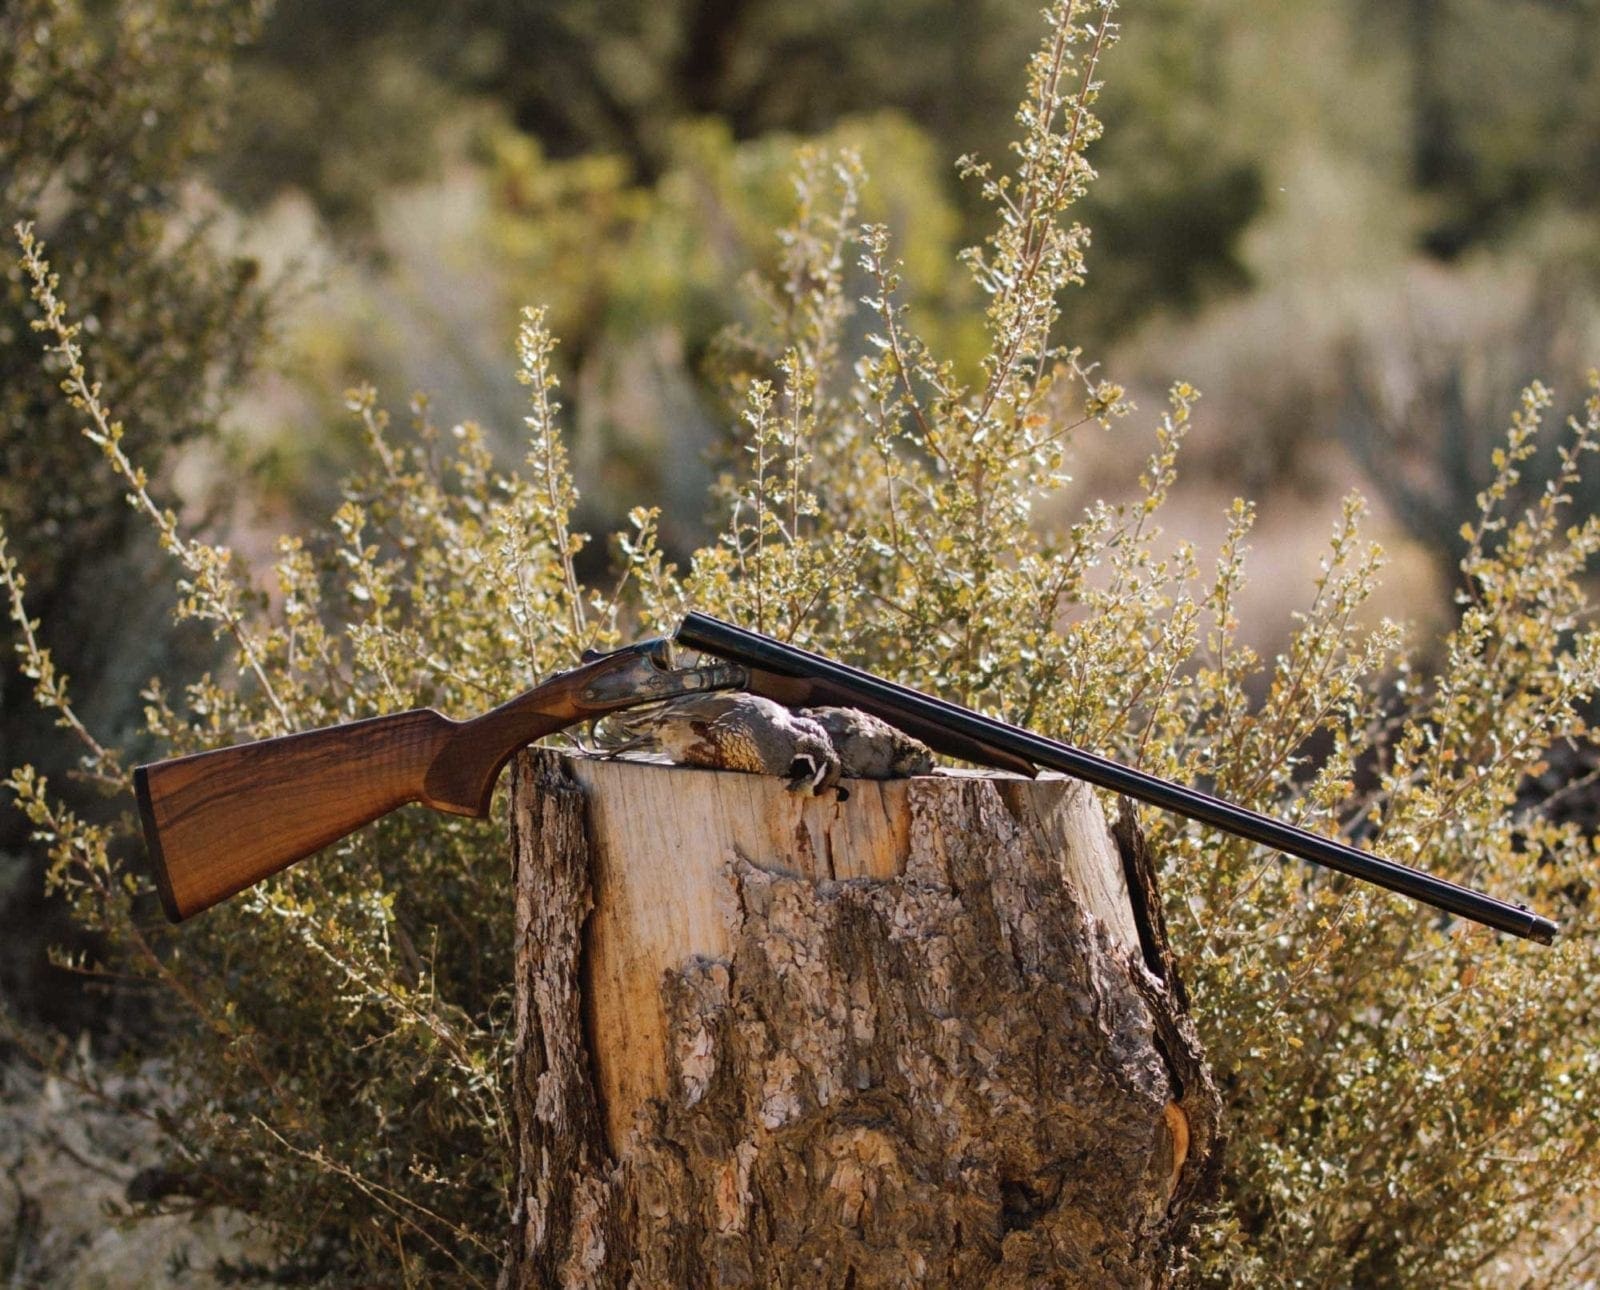 A CZ Shotgun being used on a bird hunt.